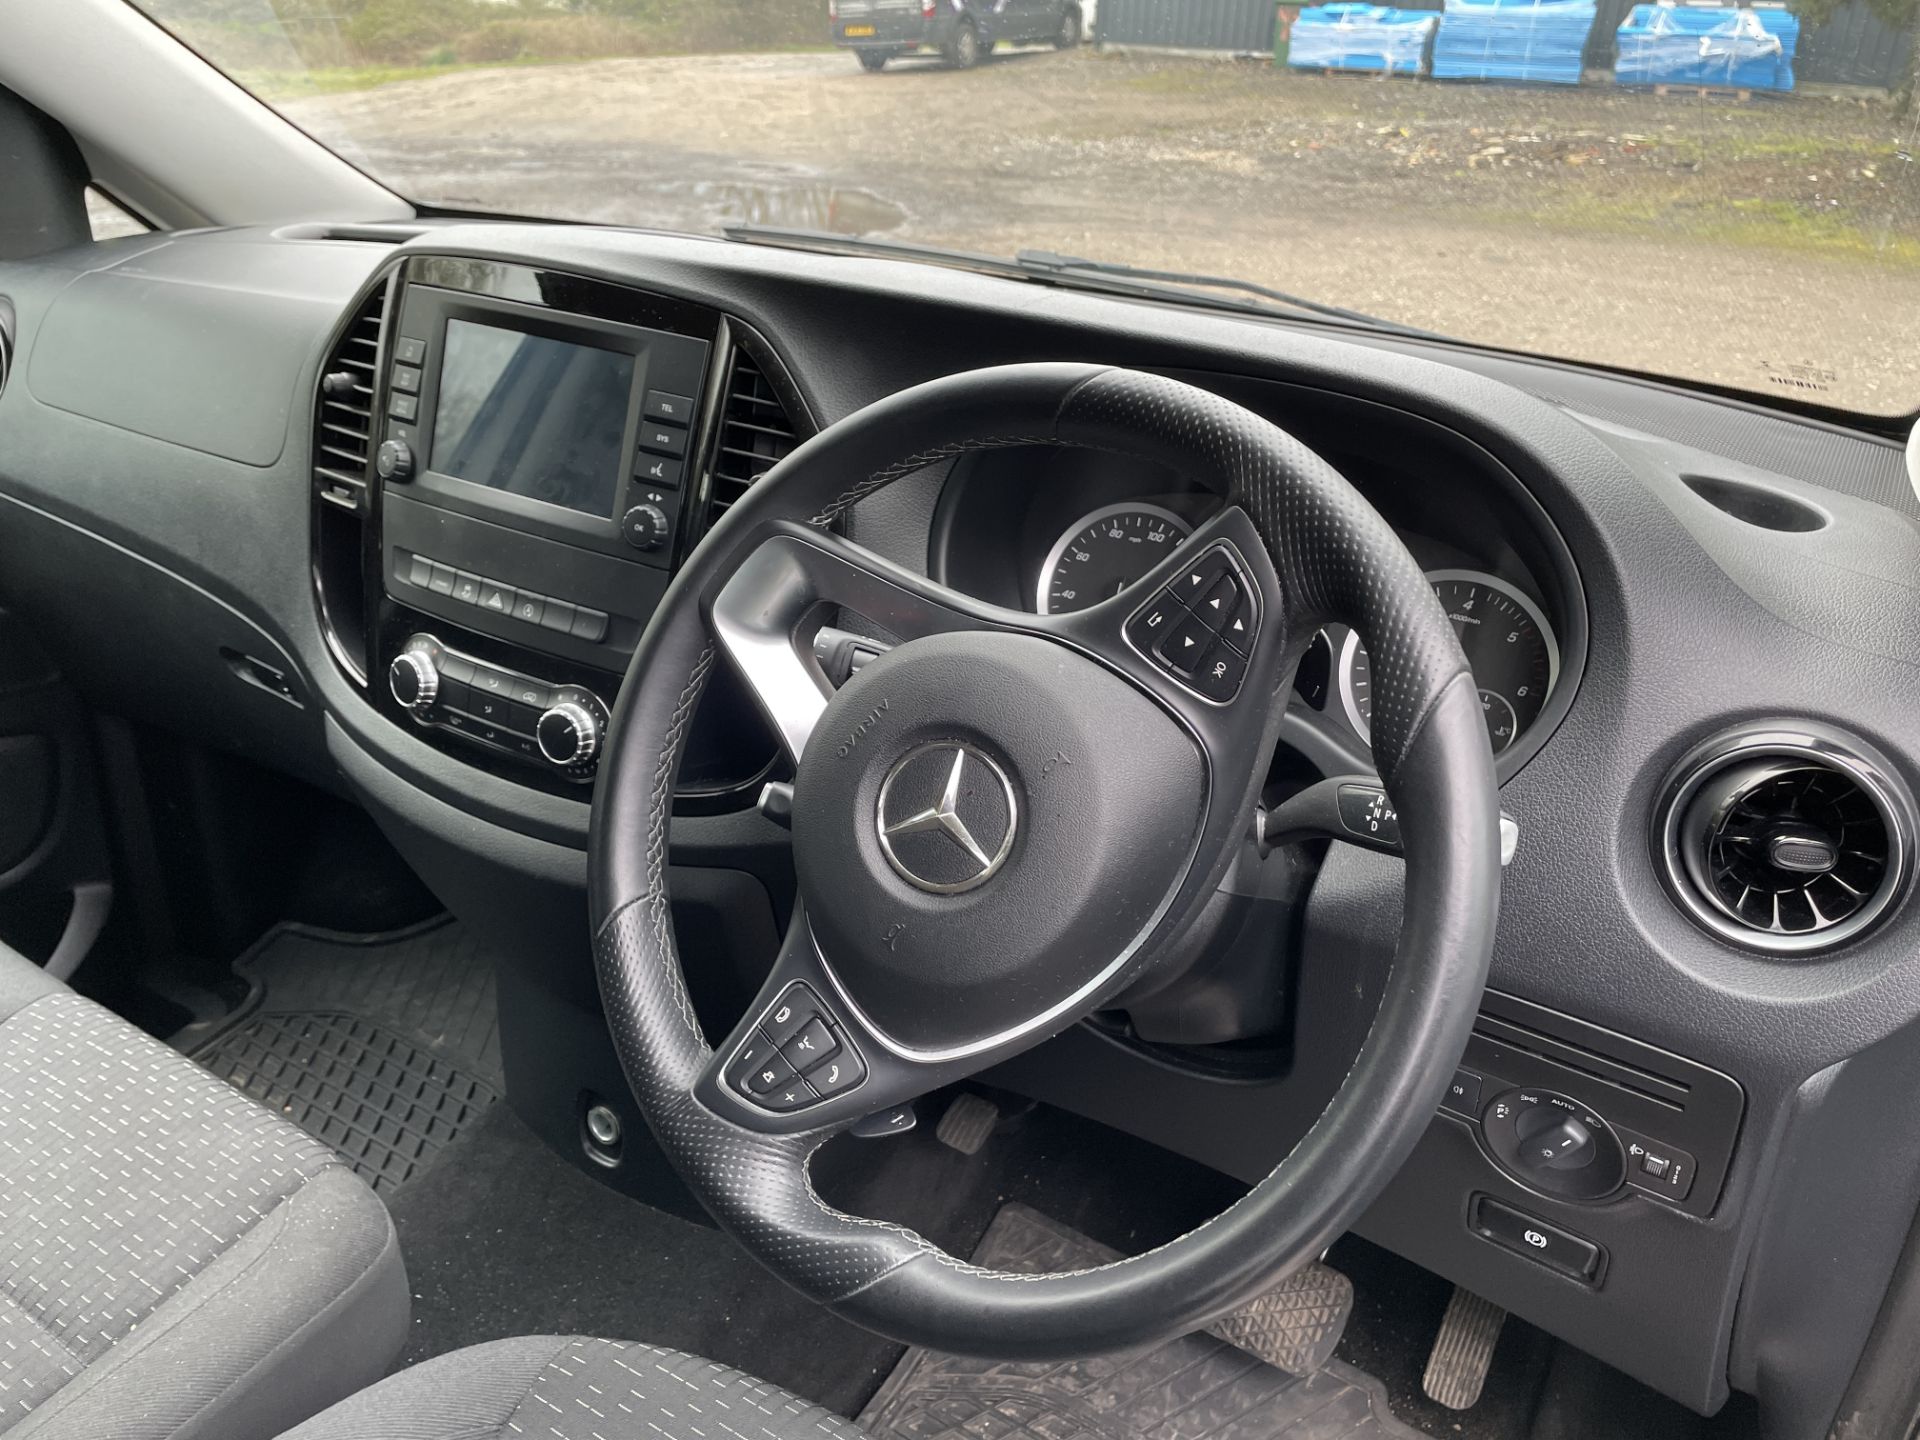 Mercedes-Benz Vito Tourer 119 CDI Select 9-Seat Minibus, 9GTronic, Registration PK22 LTU, First - Image 23 of 26